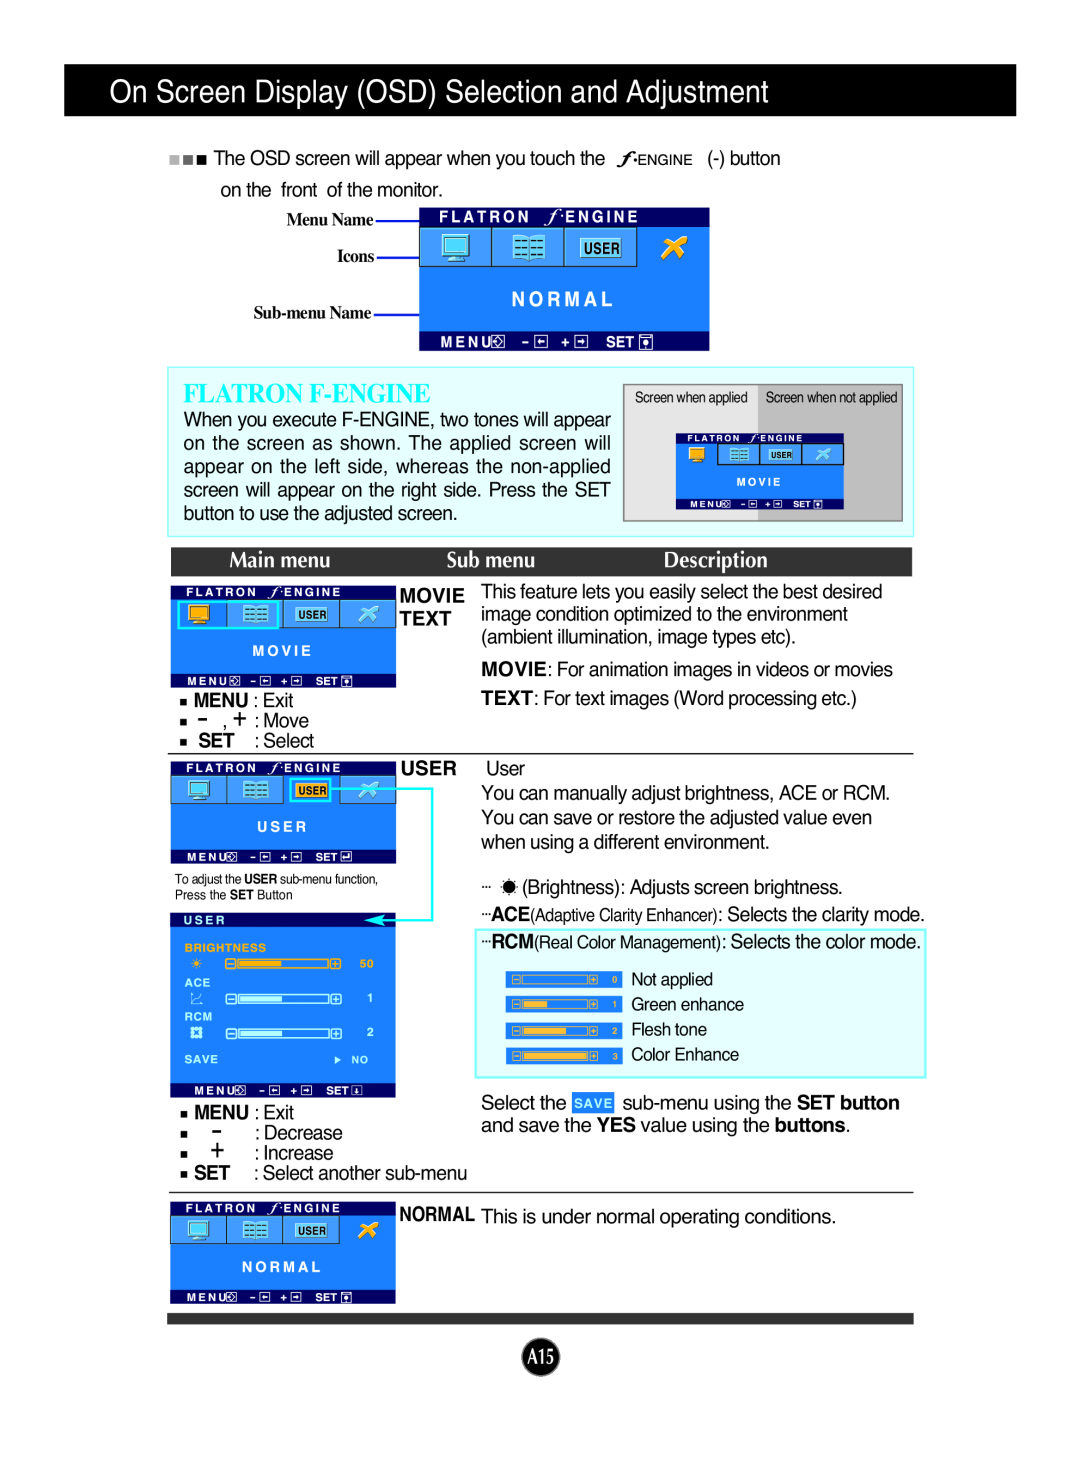 LG Electronics L1972H On Screen Display OSD Selection and Adjustment, Flatron F-Engine, Main menu, Sub menu, Description 